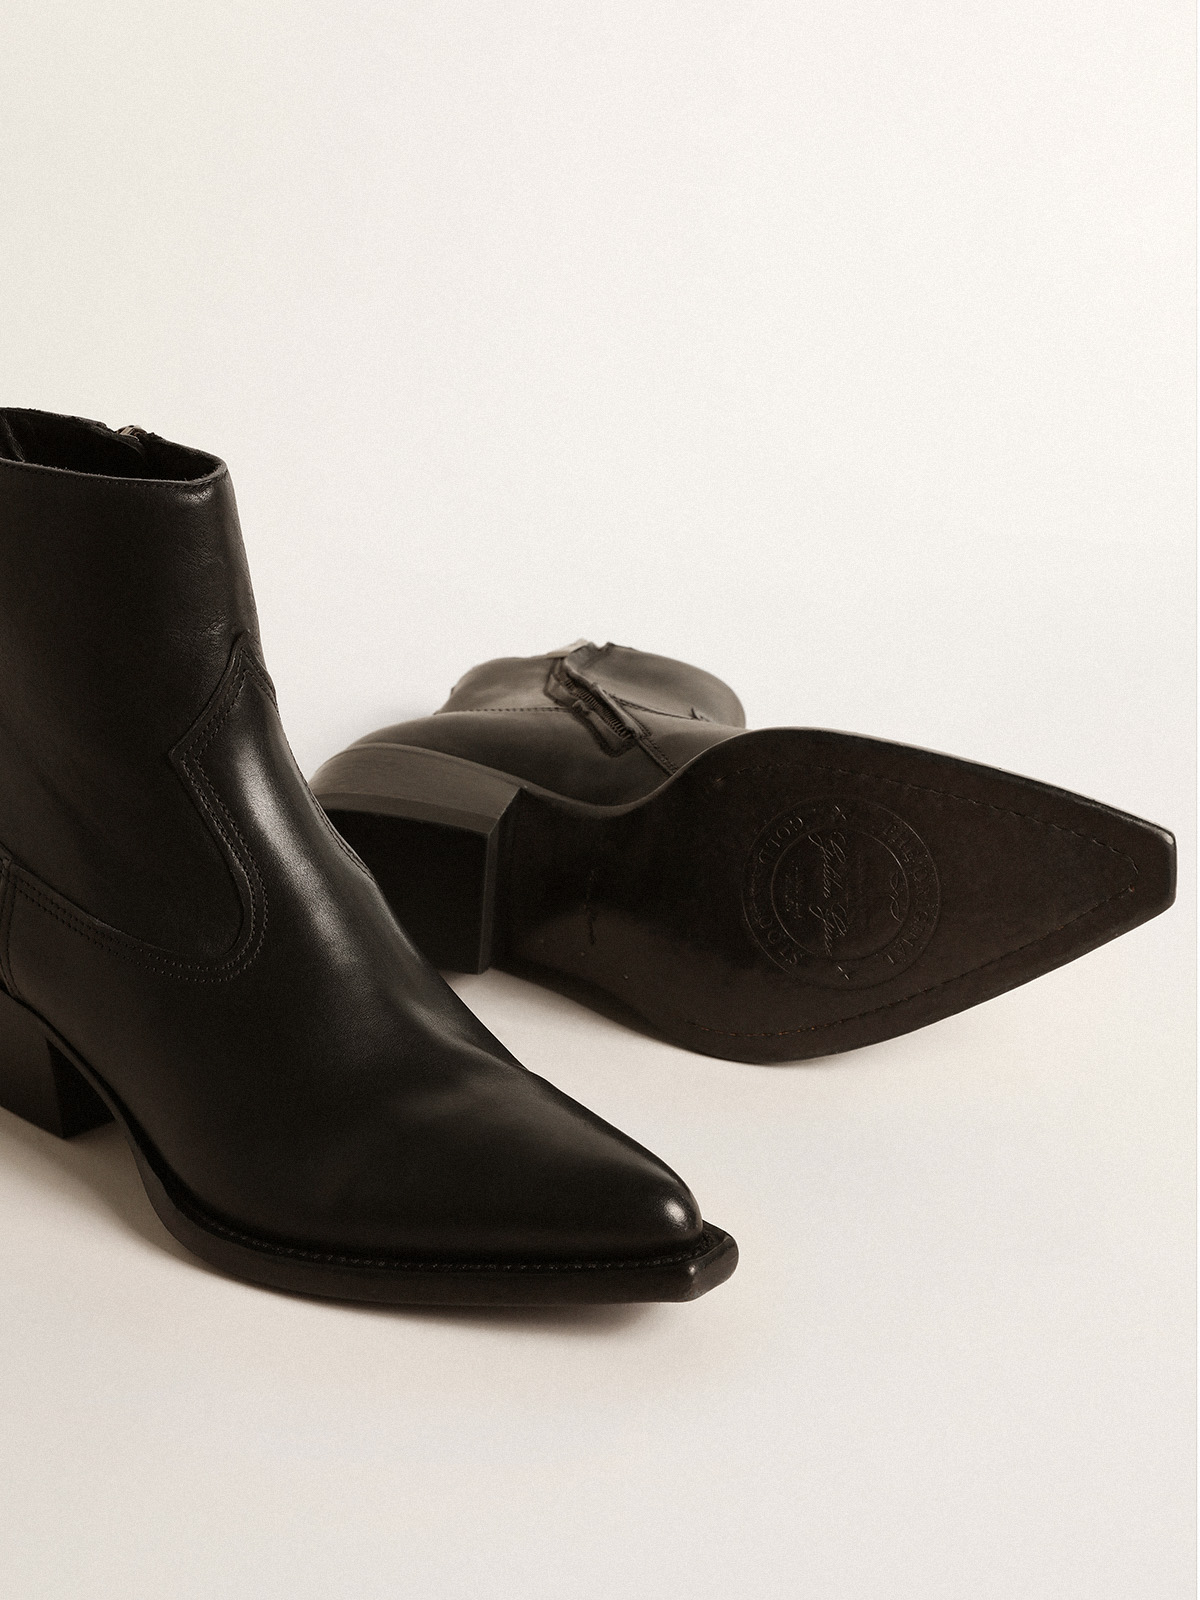 Women's Debbie boots in black leather Golden Goose